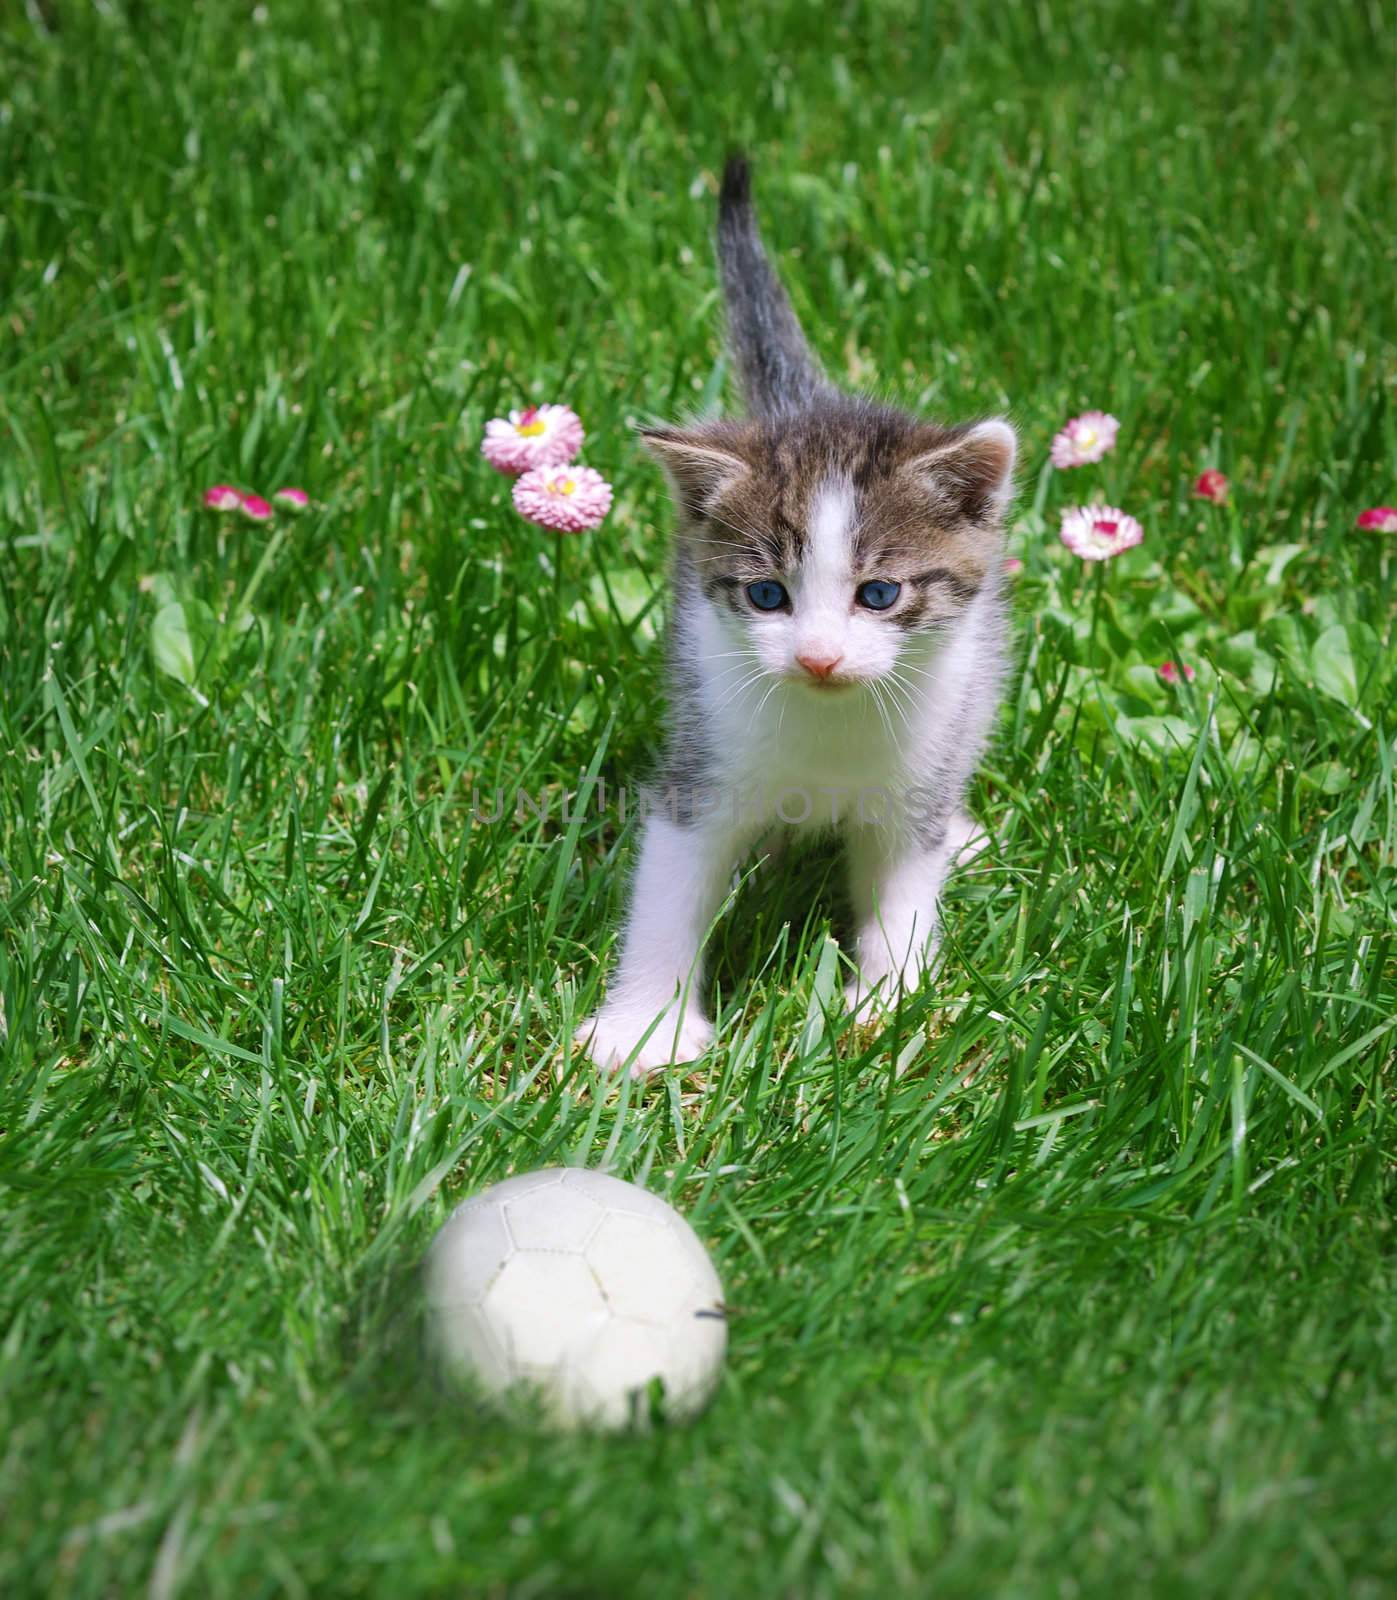 Kitten and ball by whitechild